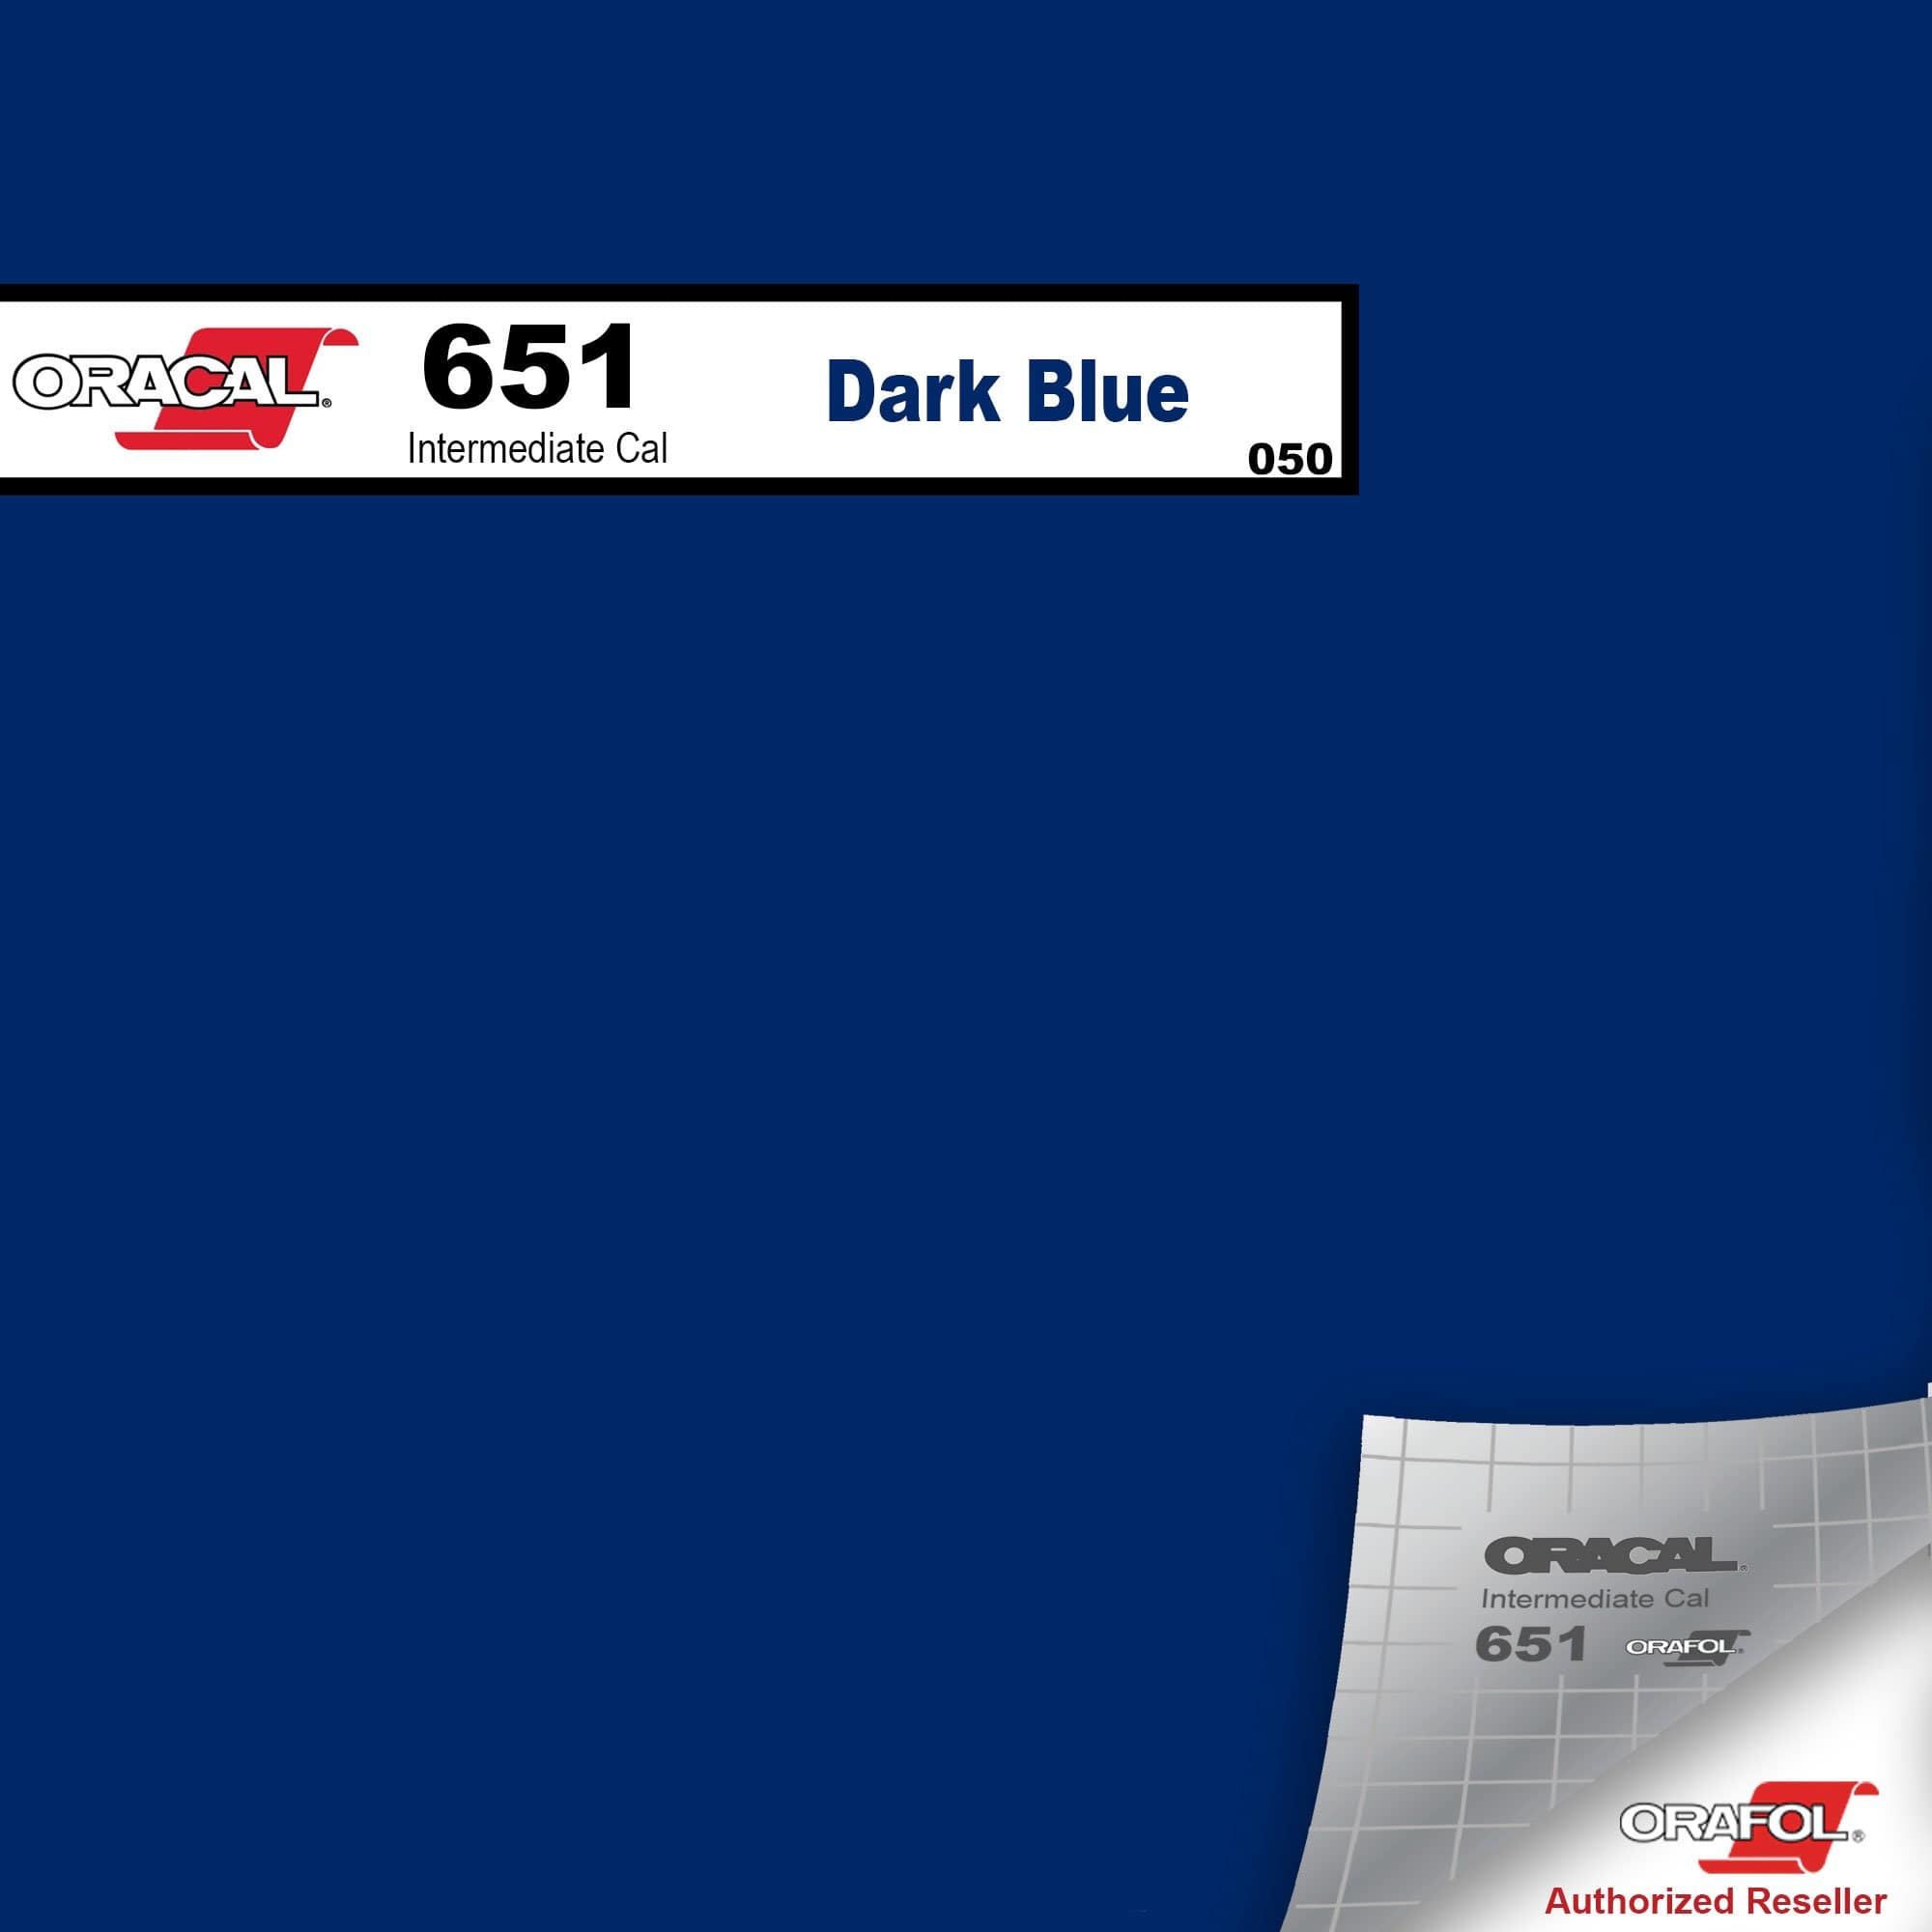 Oracal 651 - Dark Blue - 050 - 12 x 12 sheets